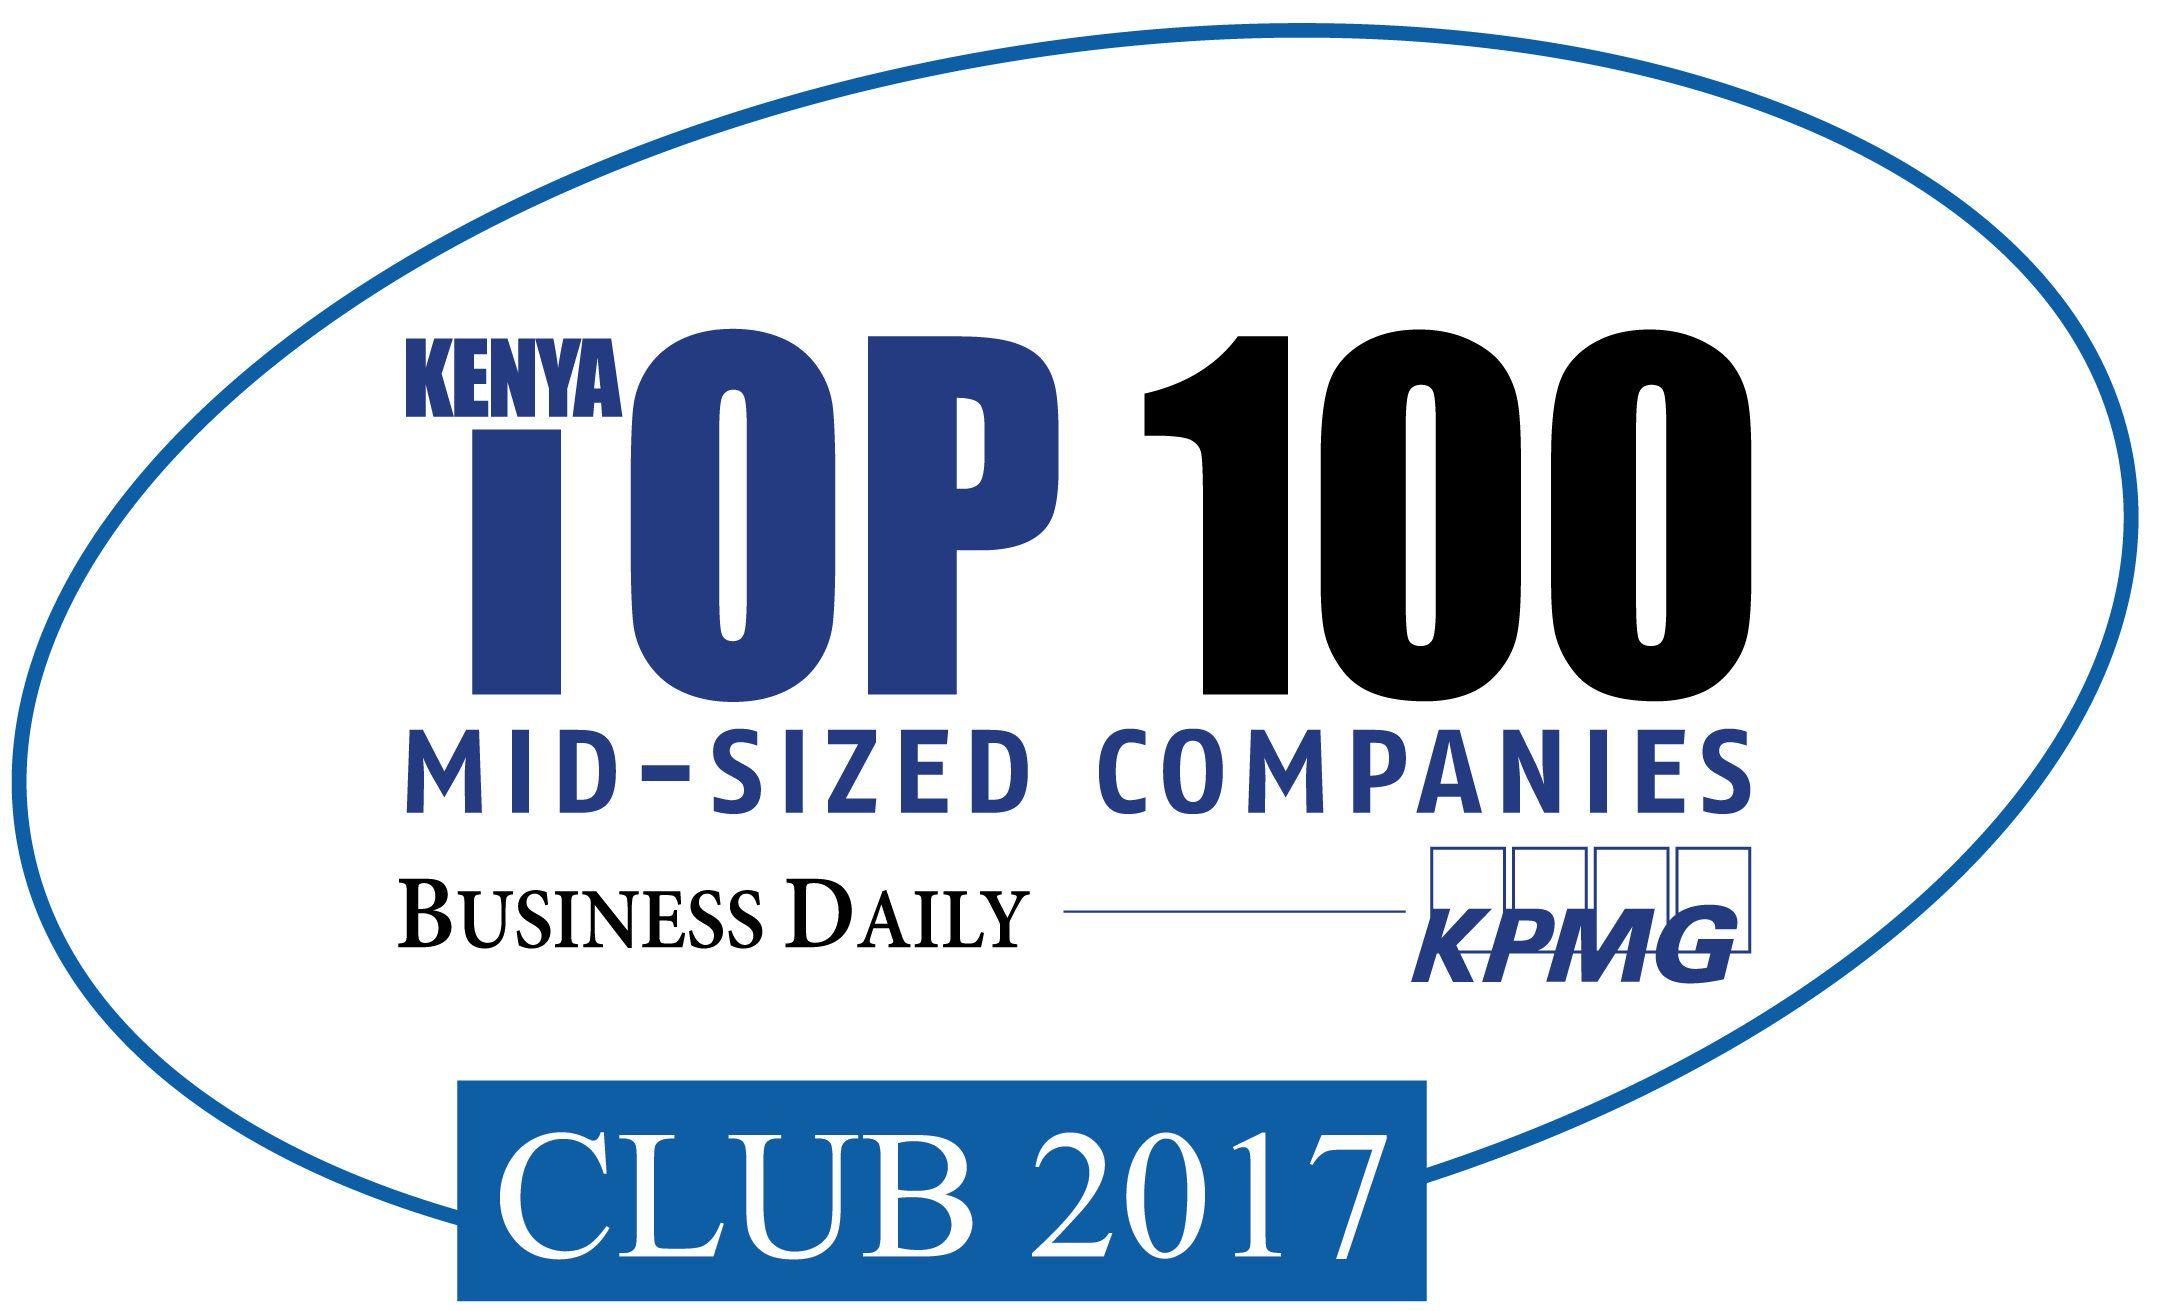 Top 100 Logo - Kenya Top100 Club Logo 2017-01 - Sollatek